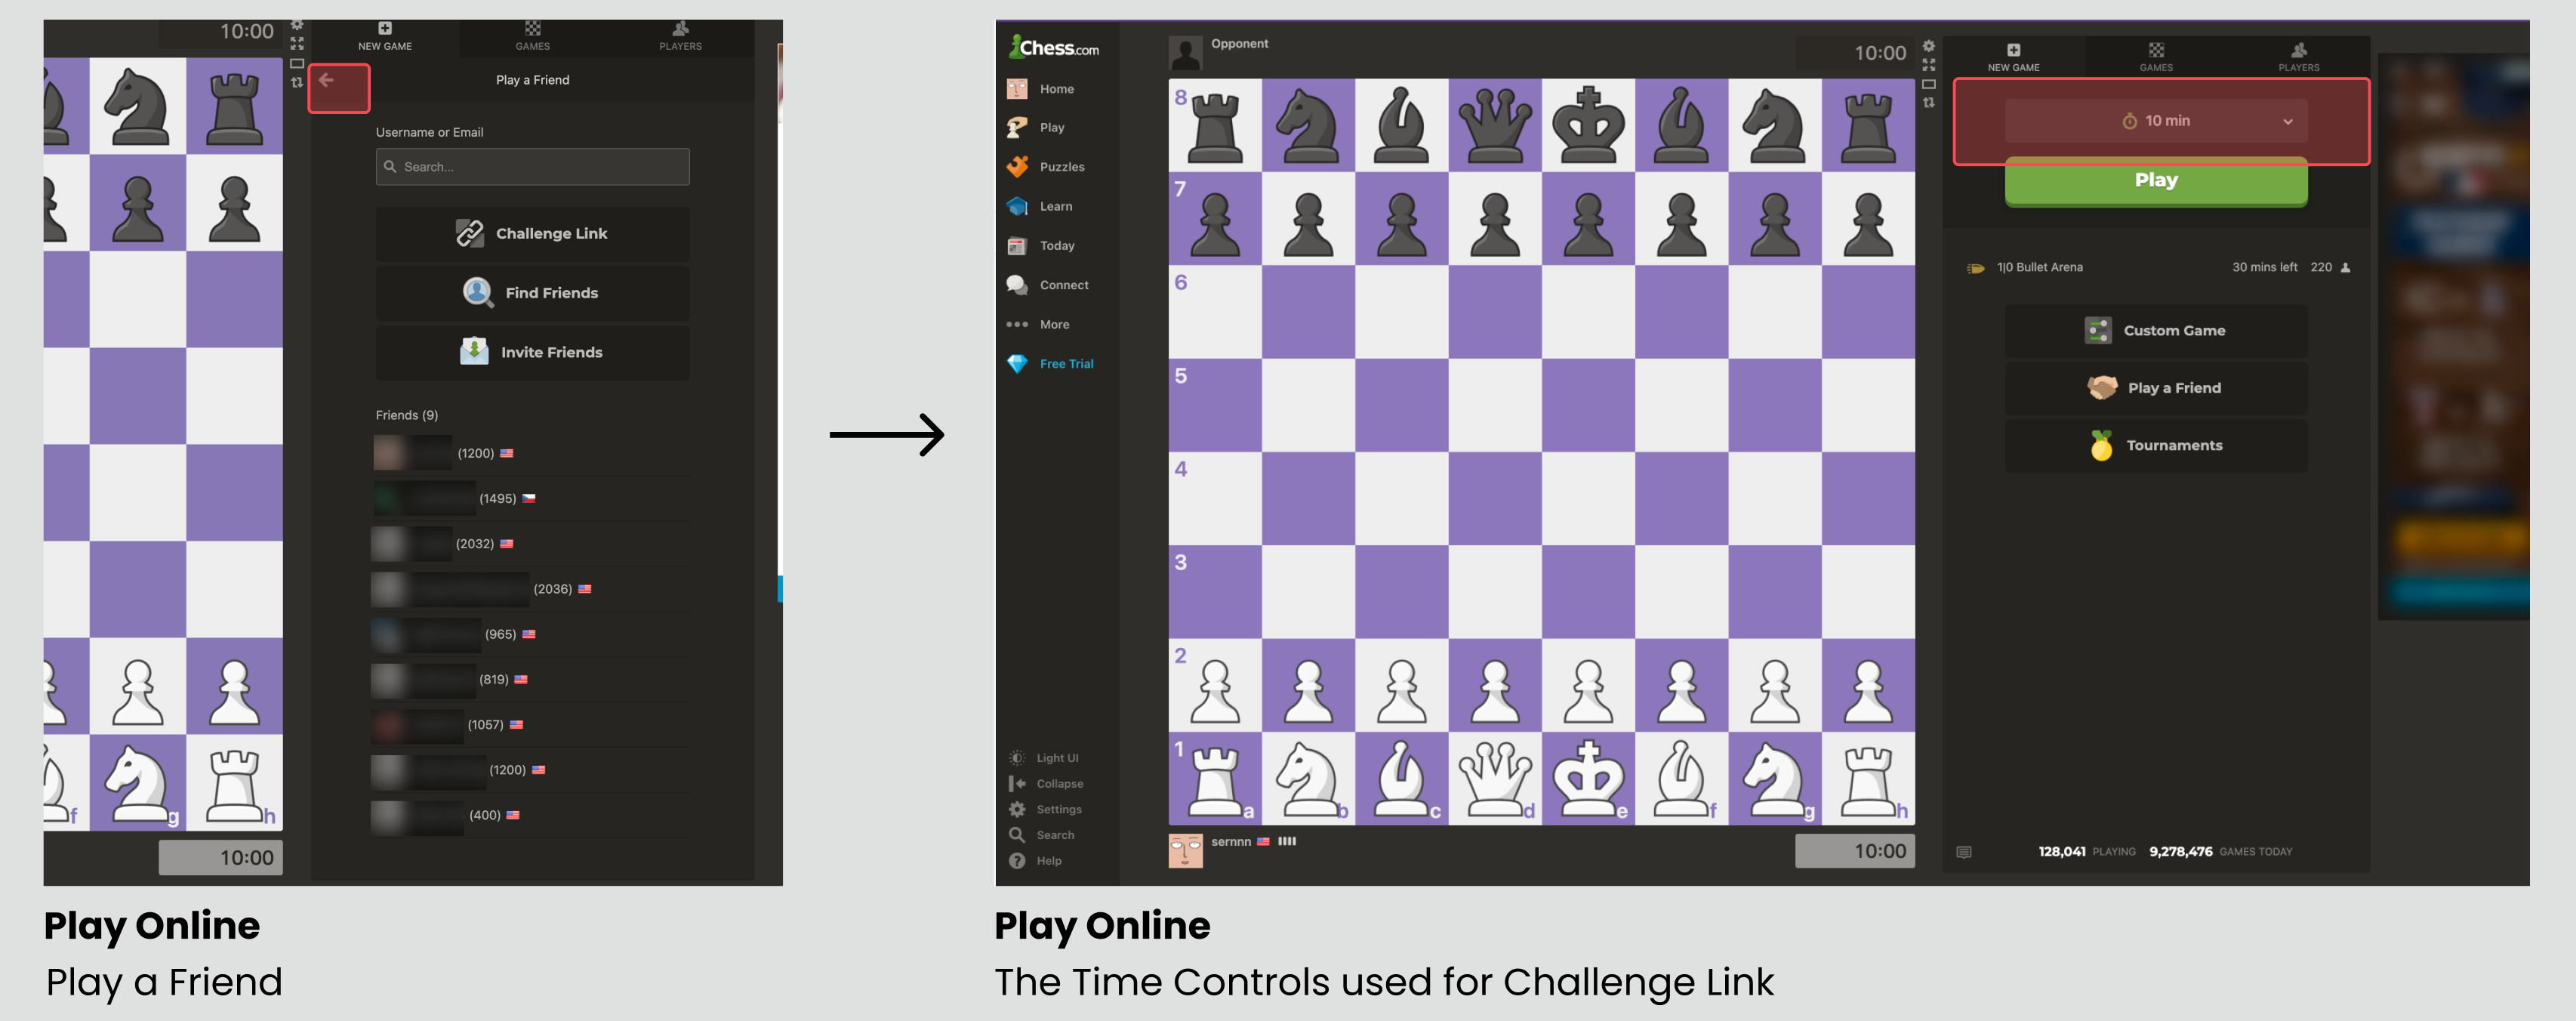 lichess.org online chess tournaments